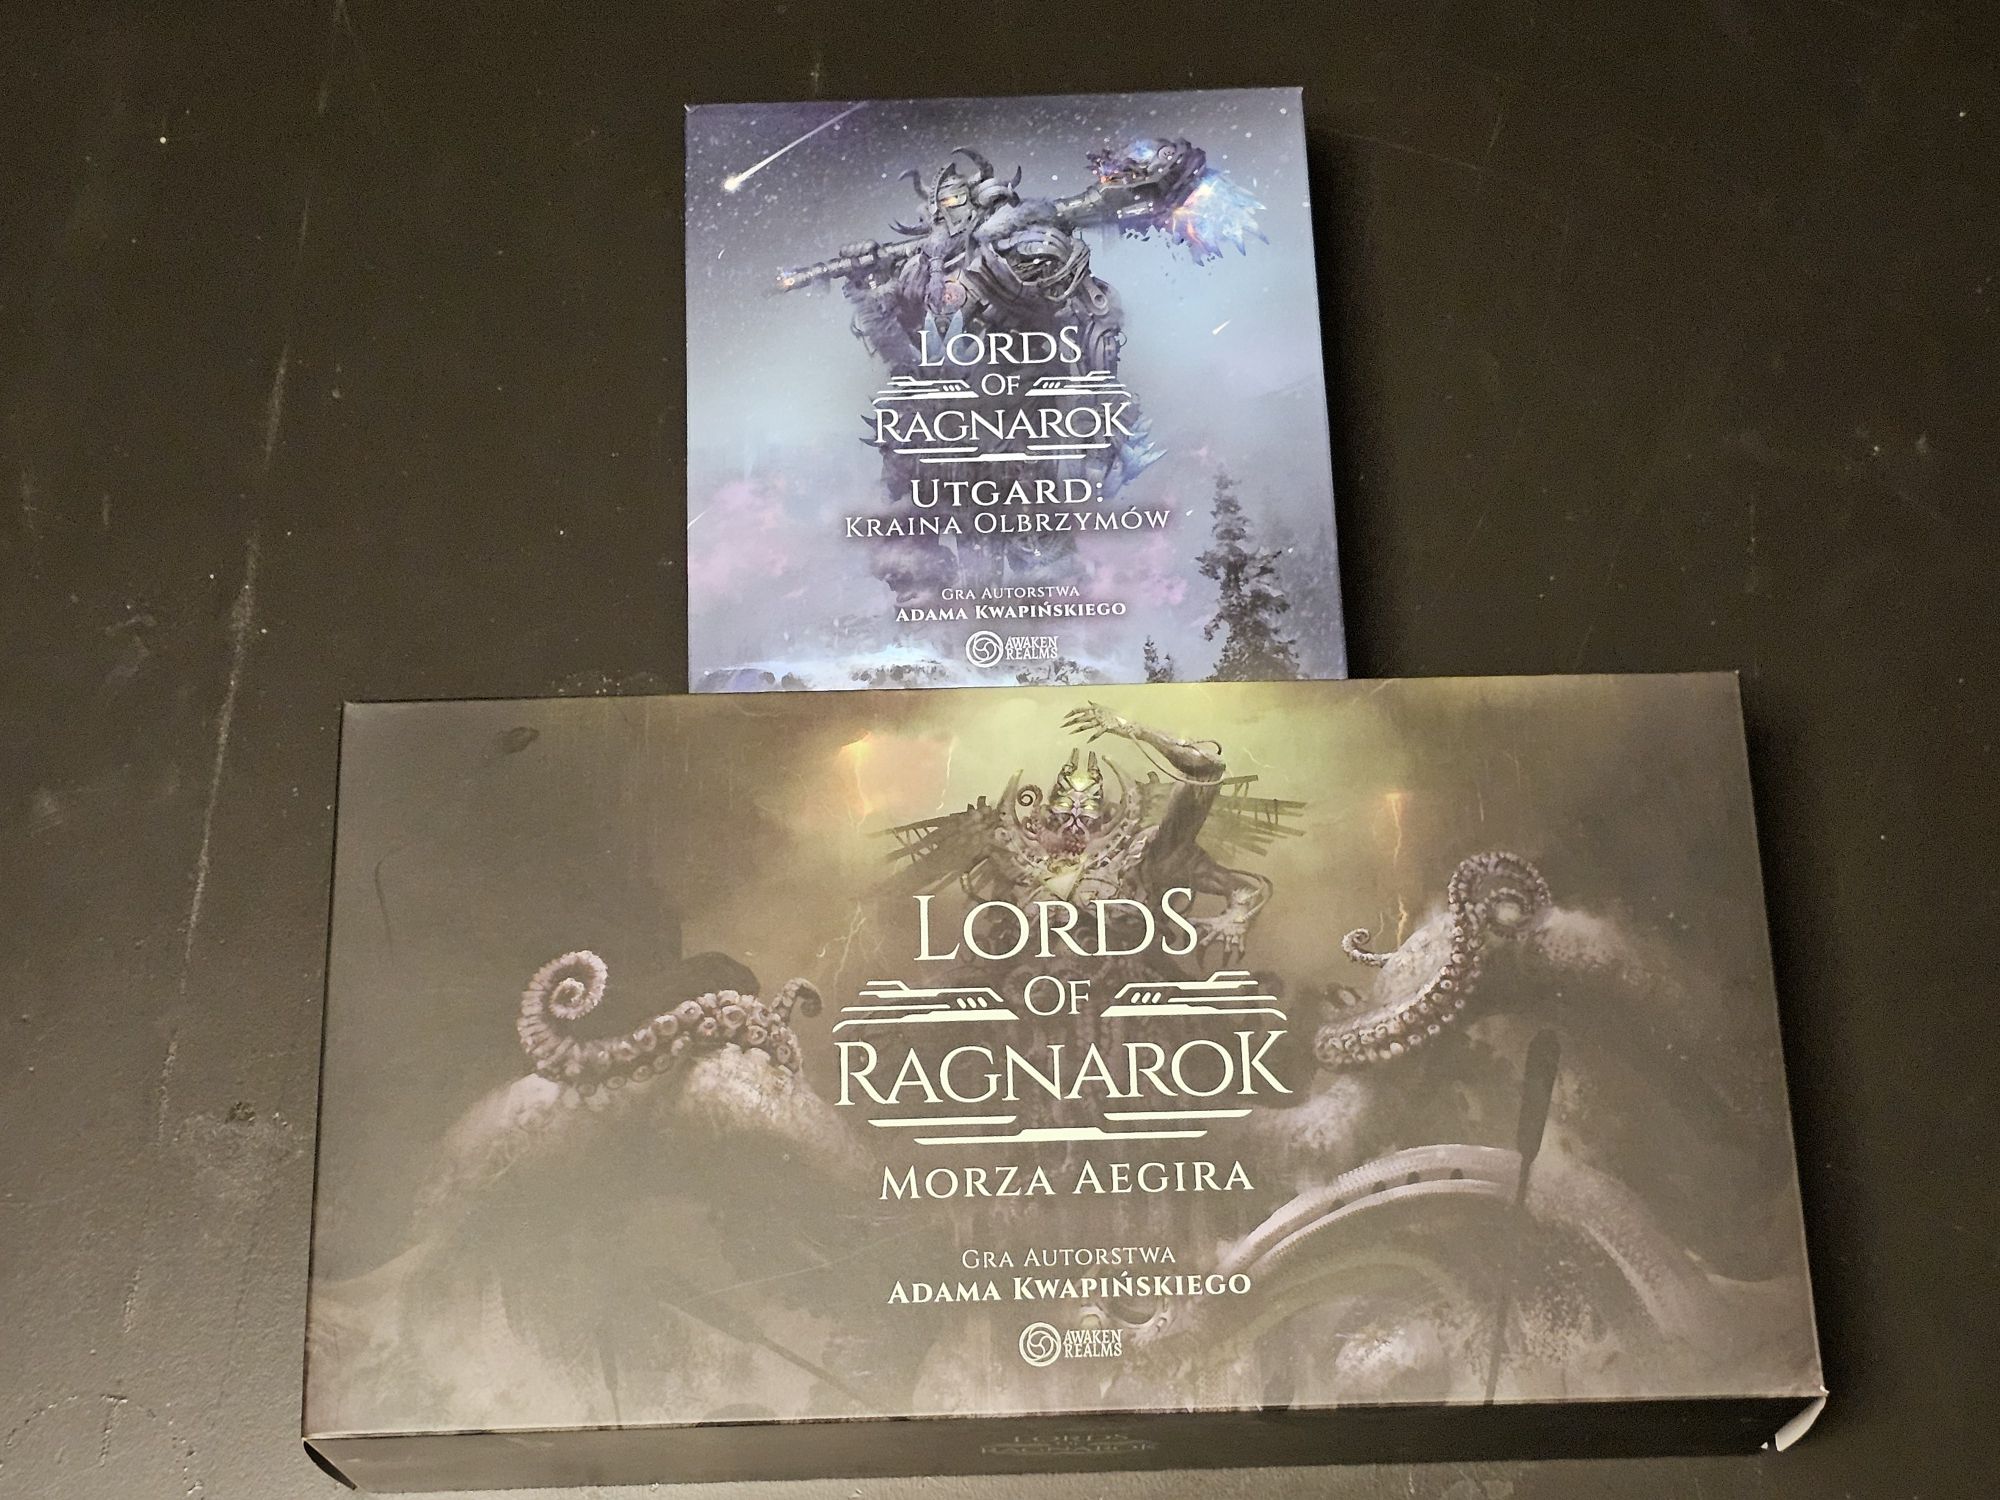 Lords of Ragnarok Gameplay Pladge + Terrain KS